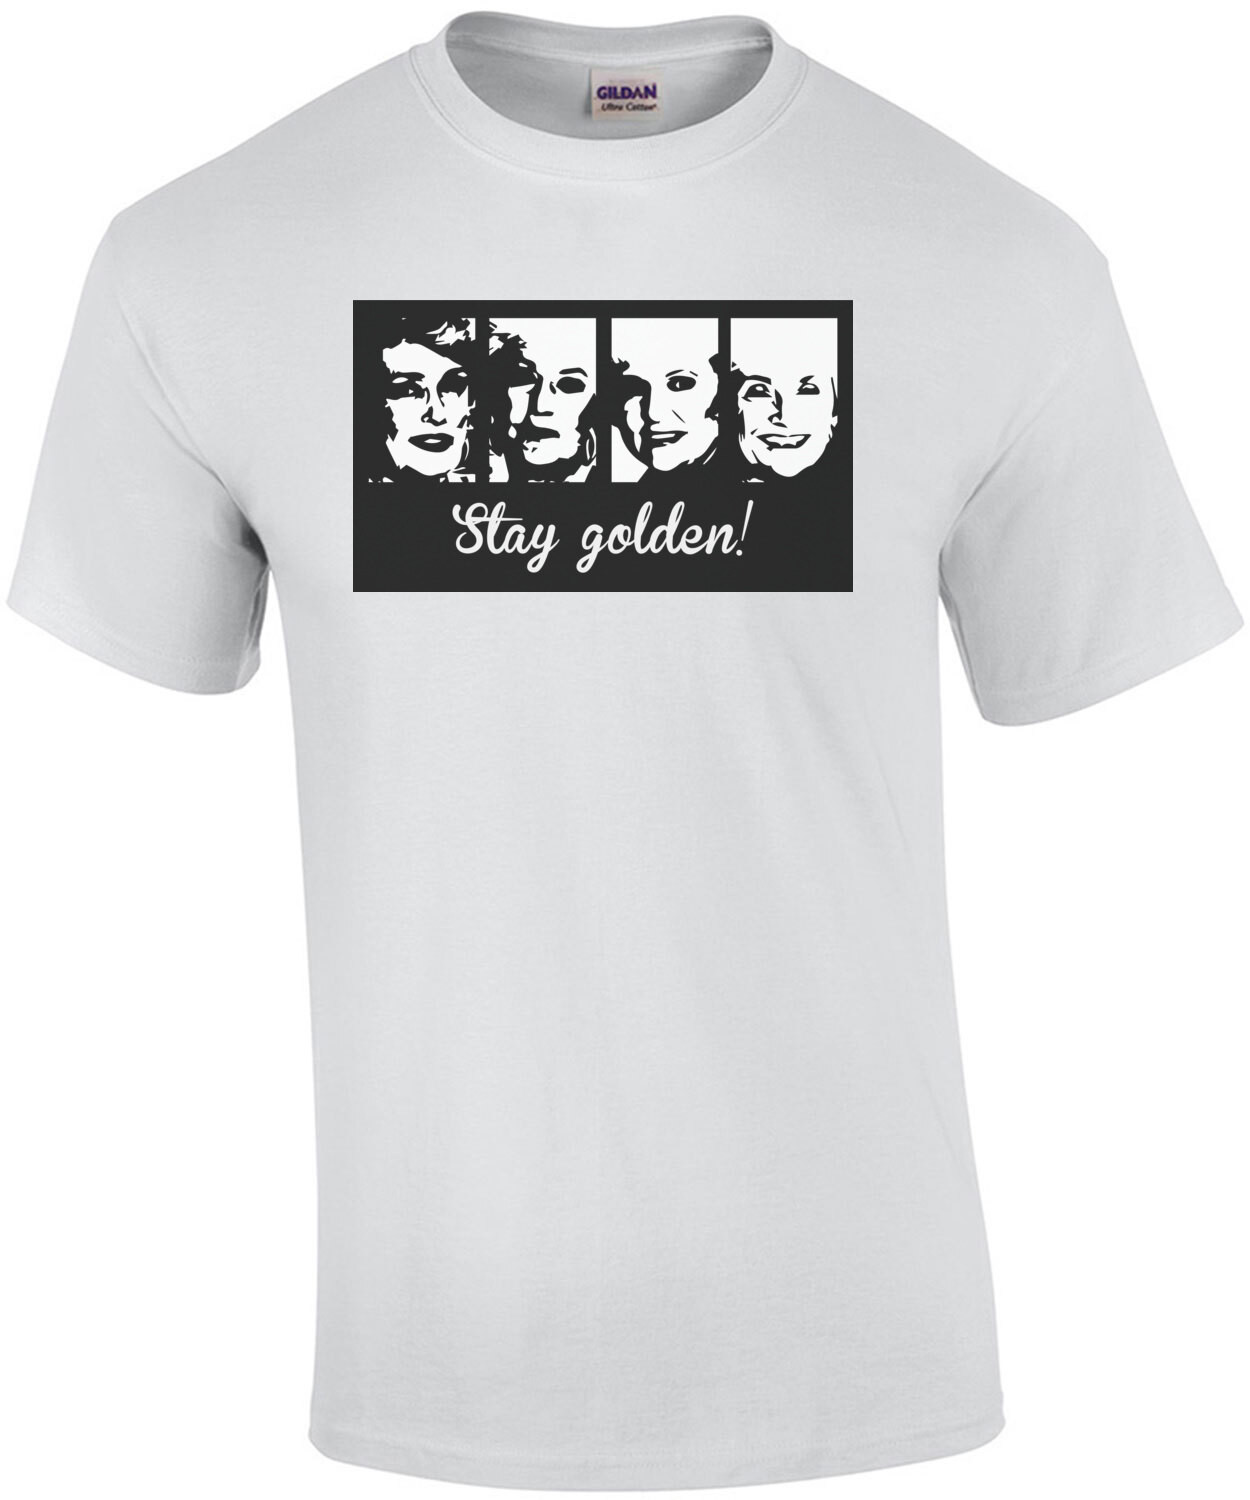 Stay Golden! - The Golden Girls - 80's T-Shirt